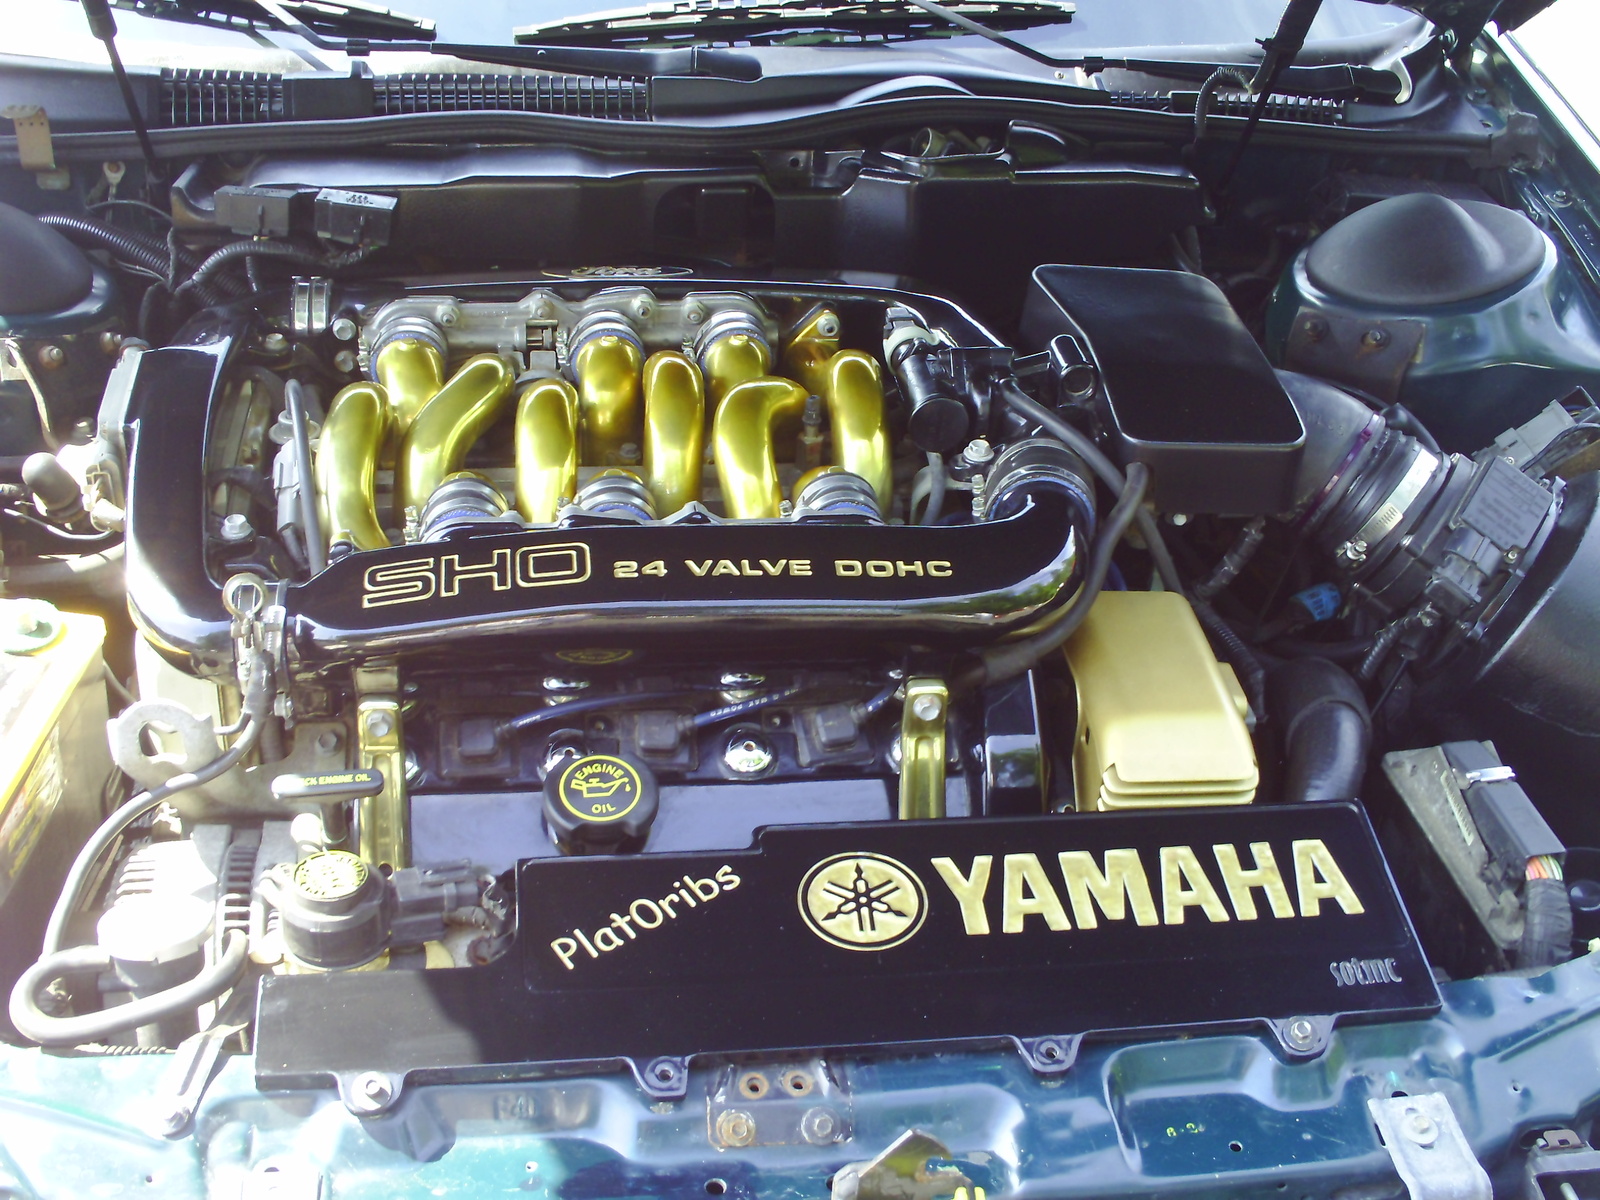 Ford taurus sho yamaha motor #8